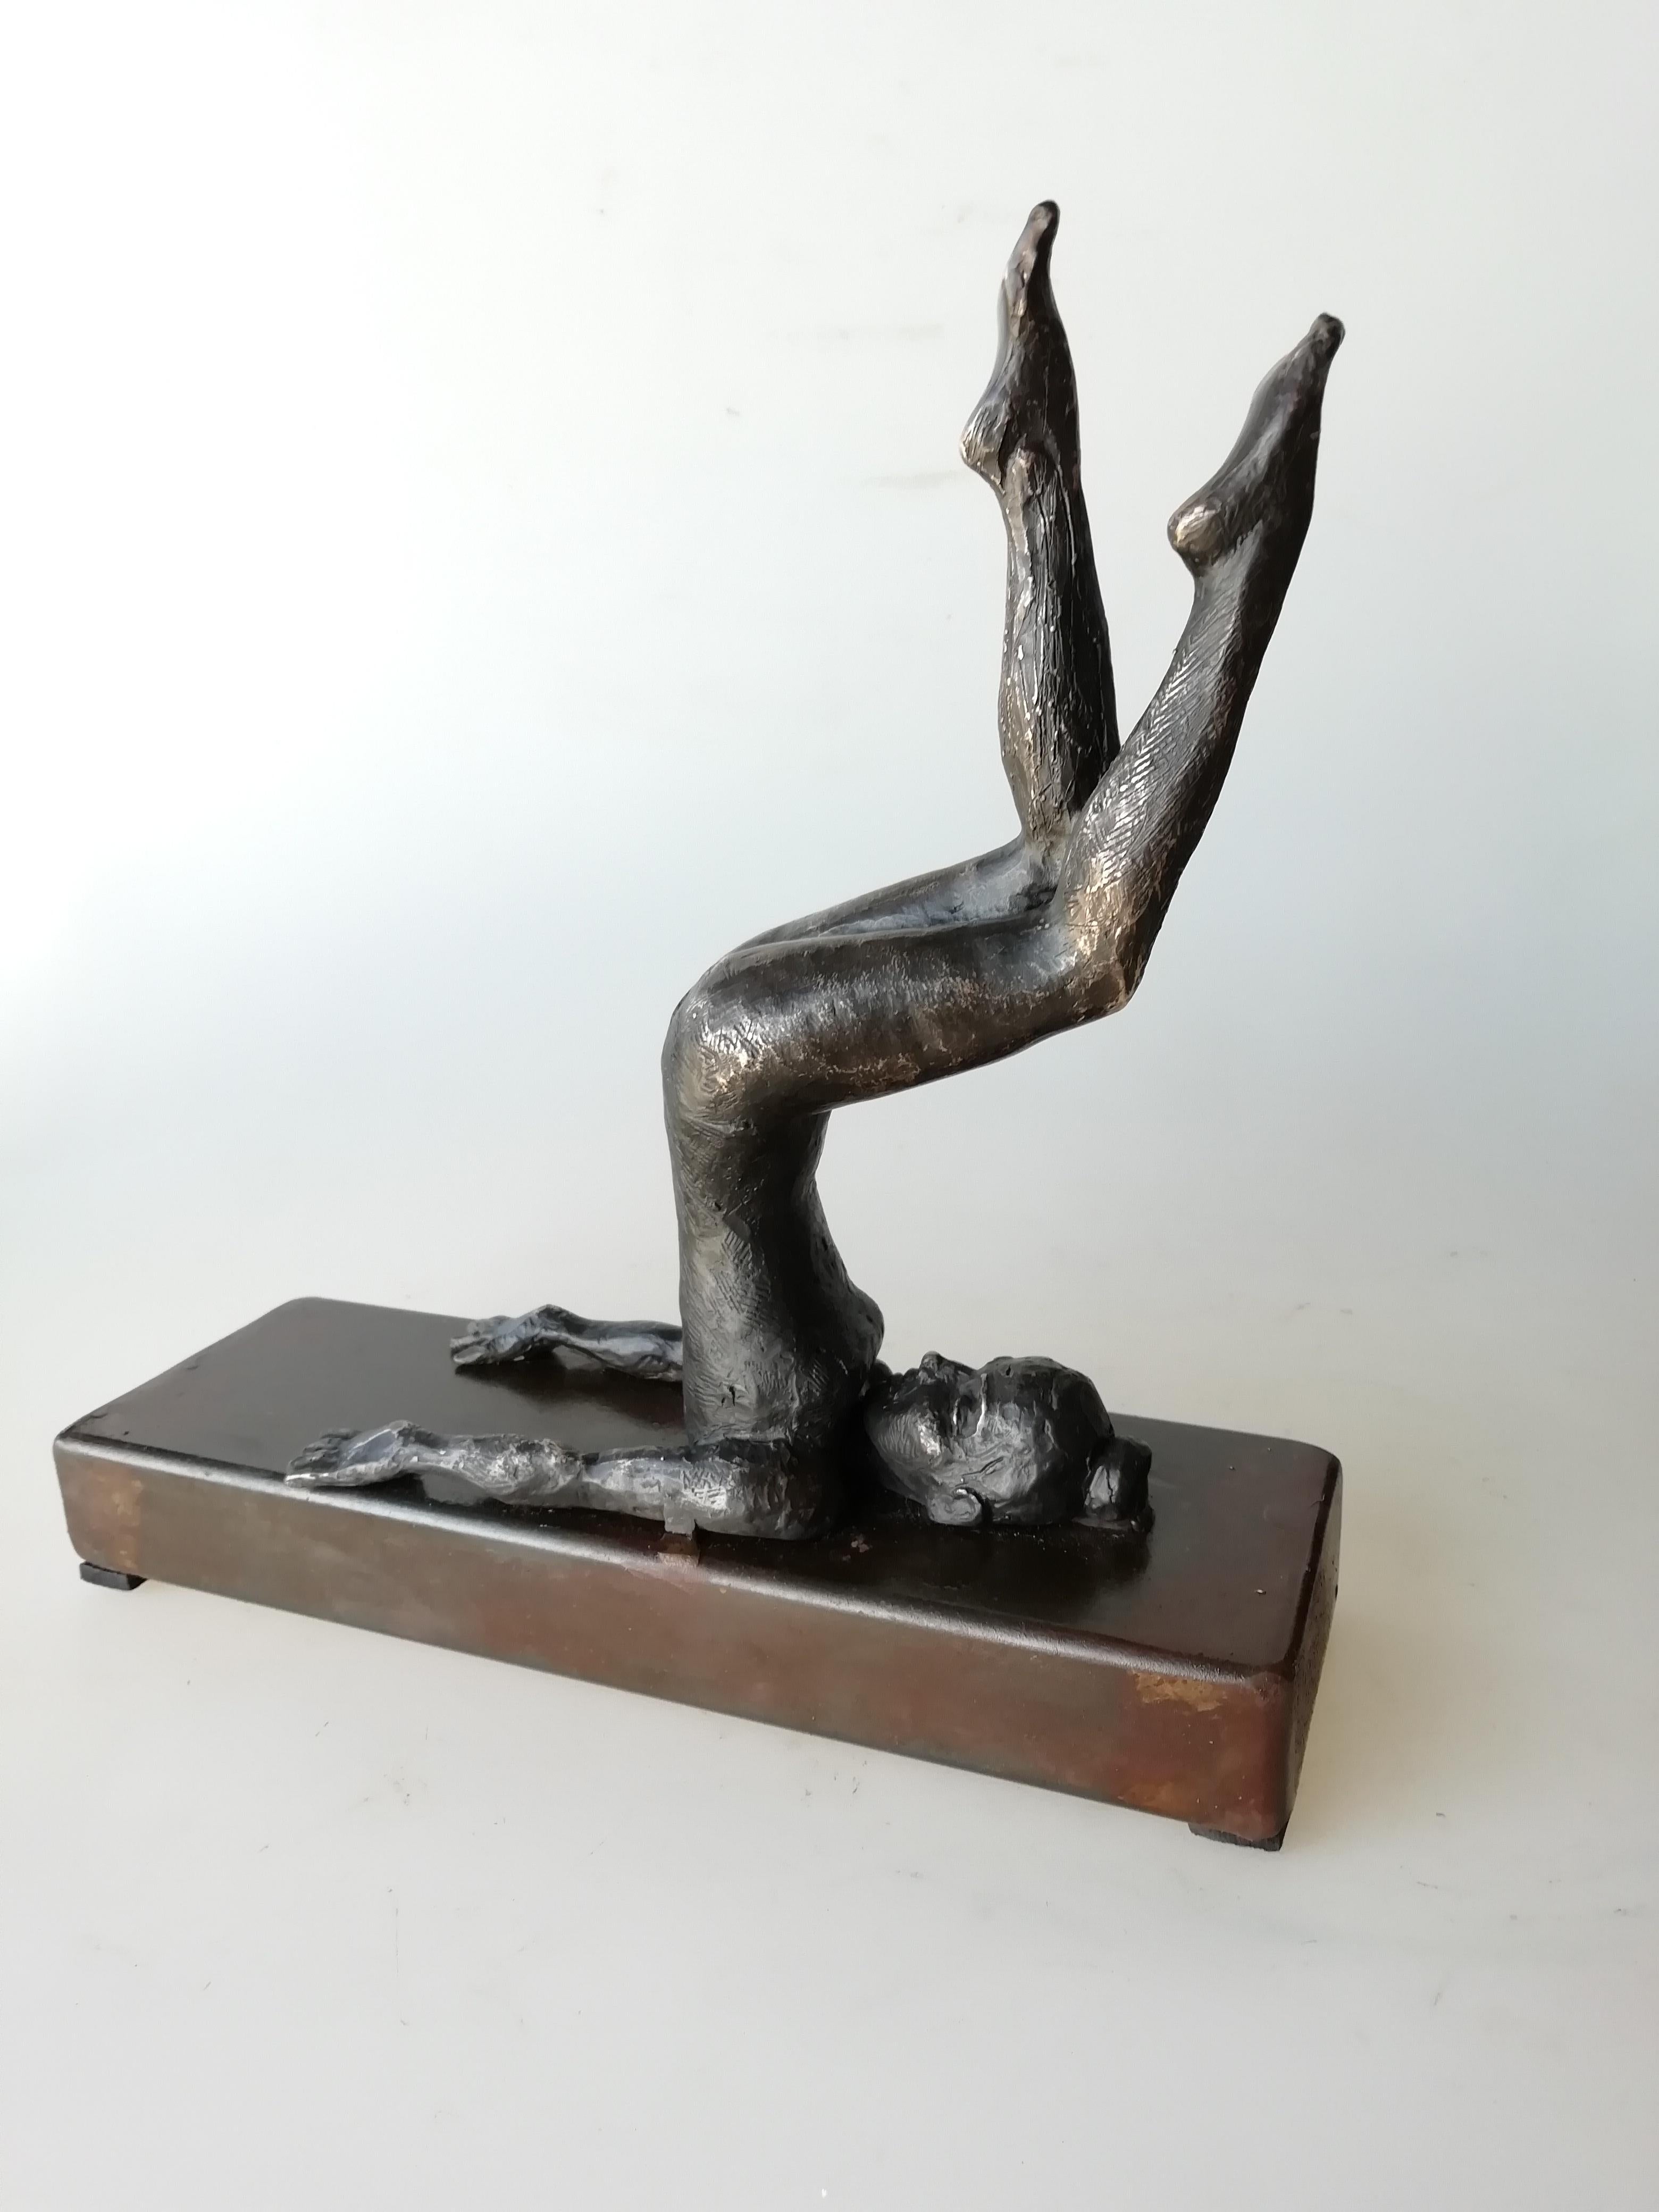 Figurative Sculpture Joan Artigas Planas - Table en bronze contemporaine « Halalasana », sculpture murale figurative fille en train de se détendre - yoga